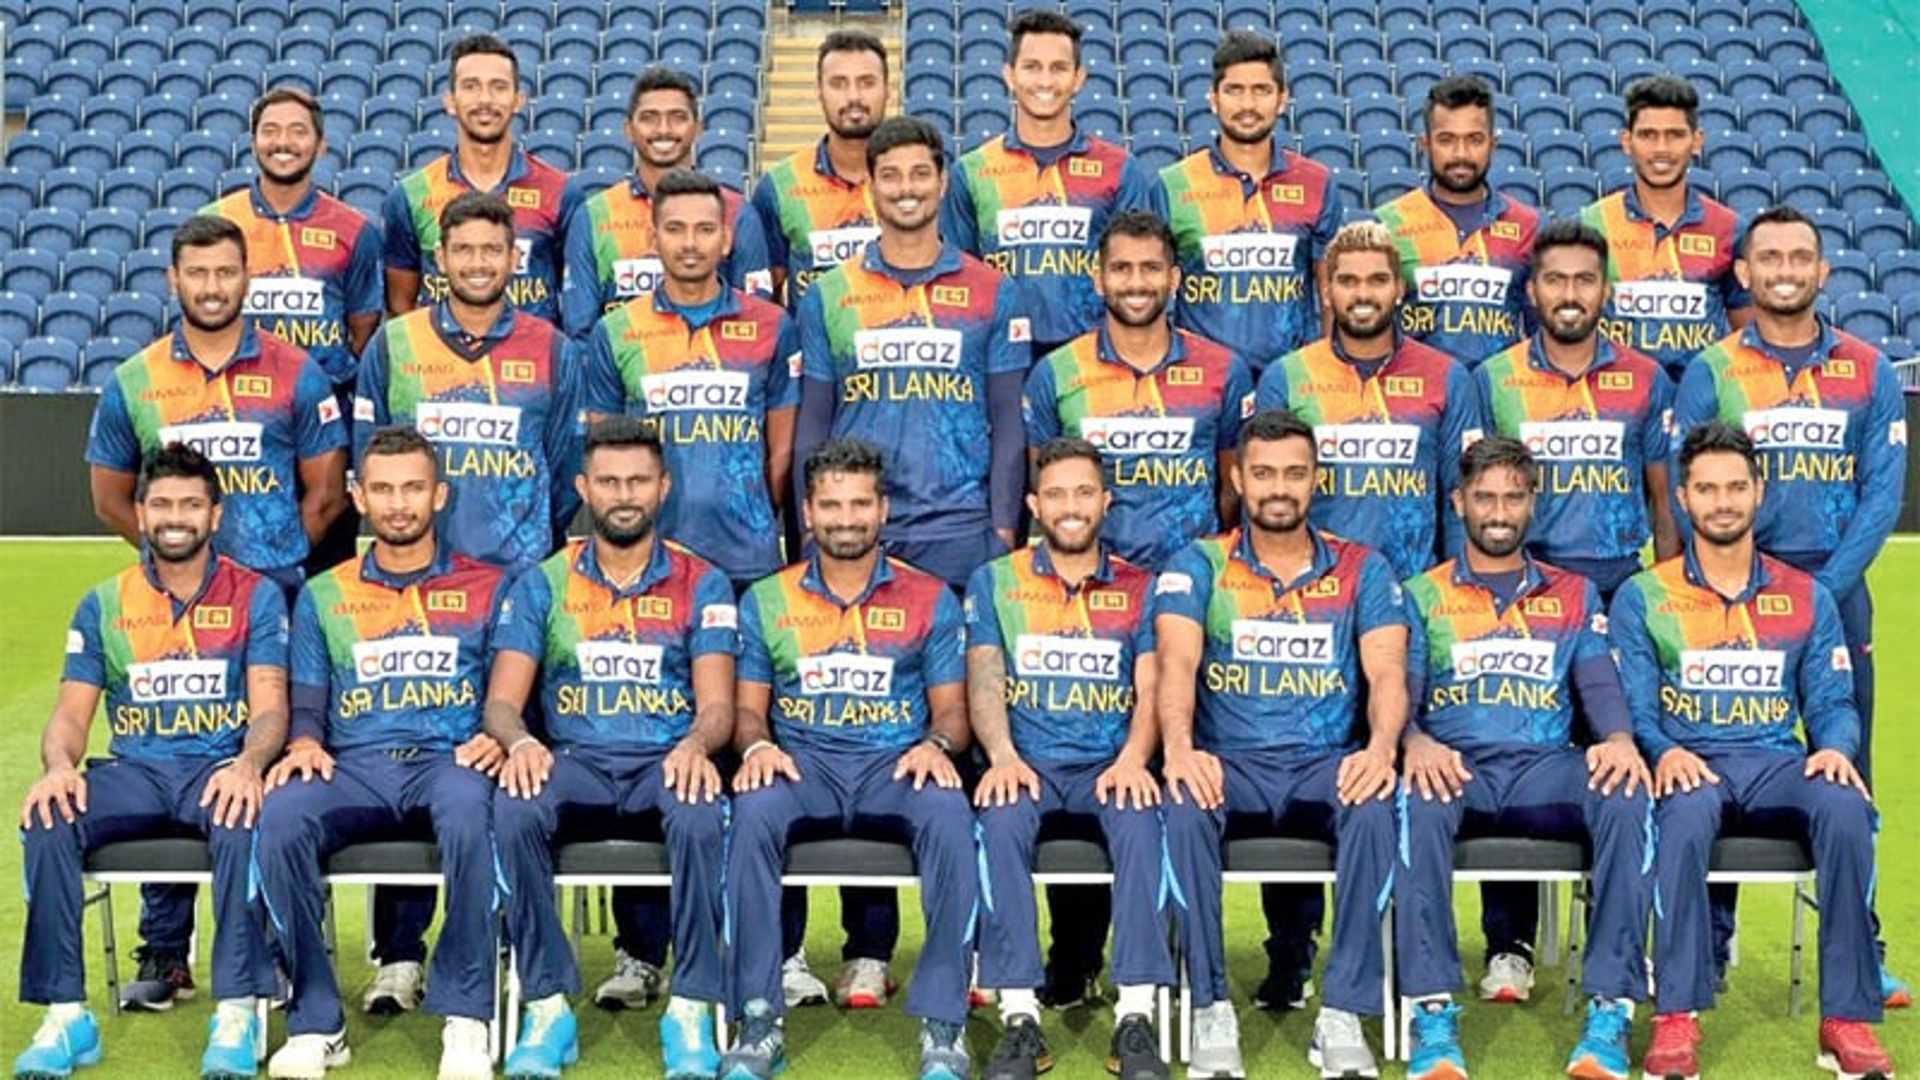 Sri lanka cricket board announces 15 member squad for the ICC T20 World Cup 2022